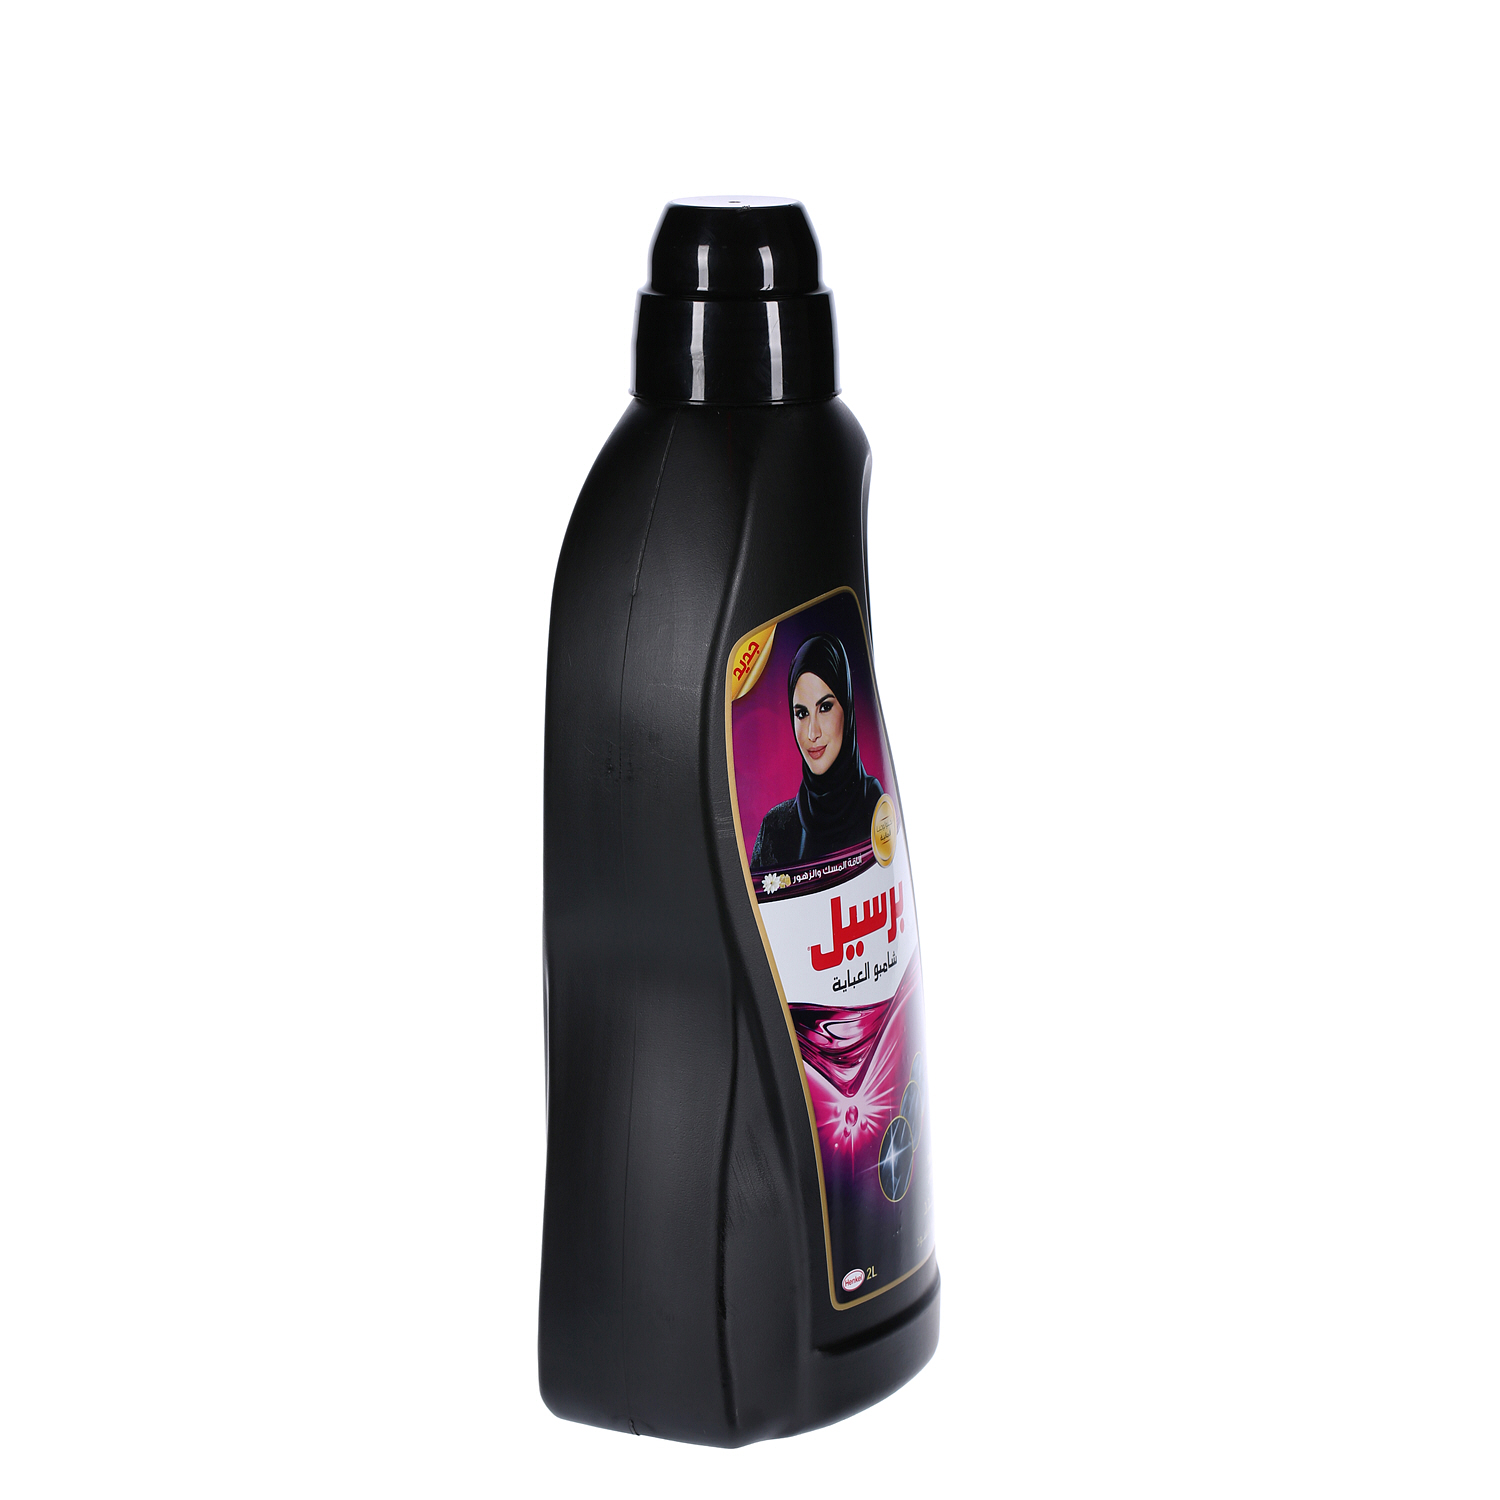 Persil Abaya Shampoo Liquid Detergent Anaqa Musk and Flower 2 L